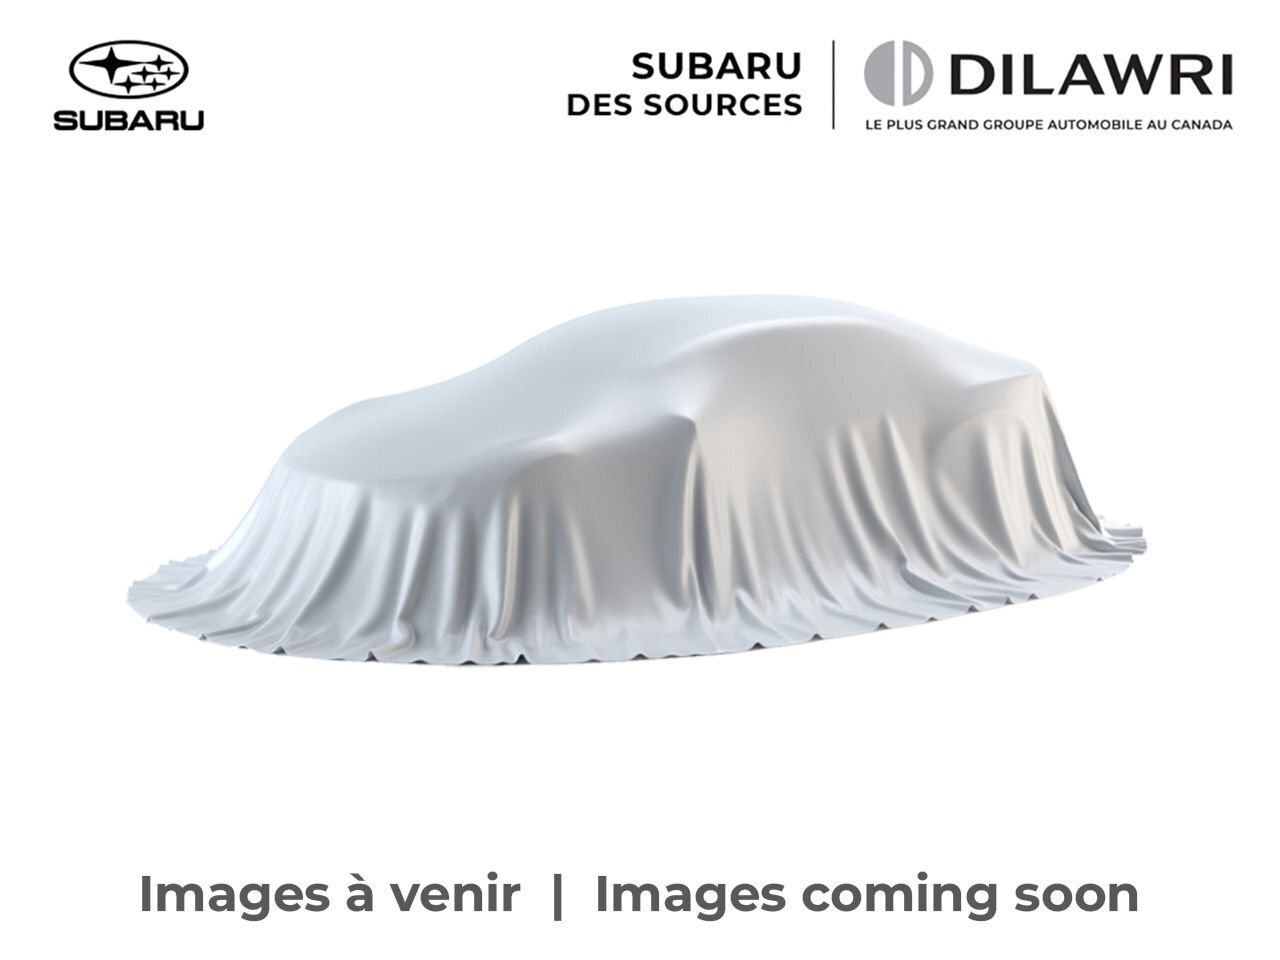 2019 Subaru Outback Premier 3.6R - 6 cyl. 256 HP, GPS Navi + + Heated 